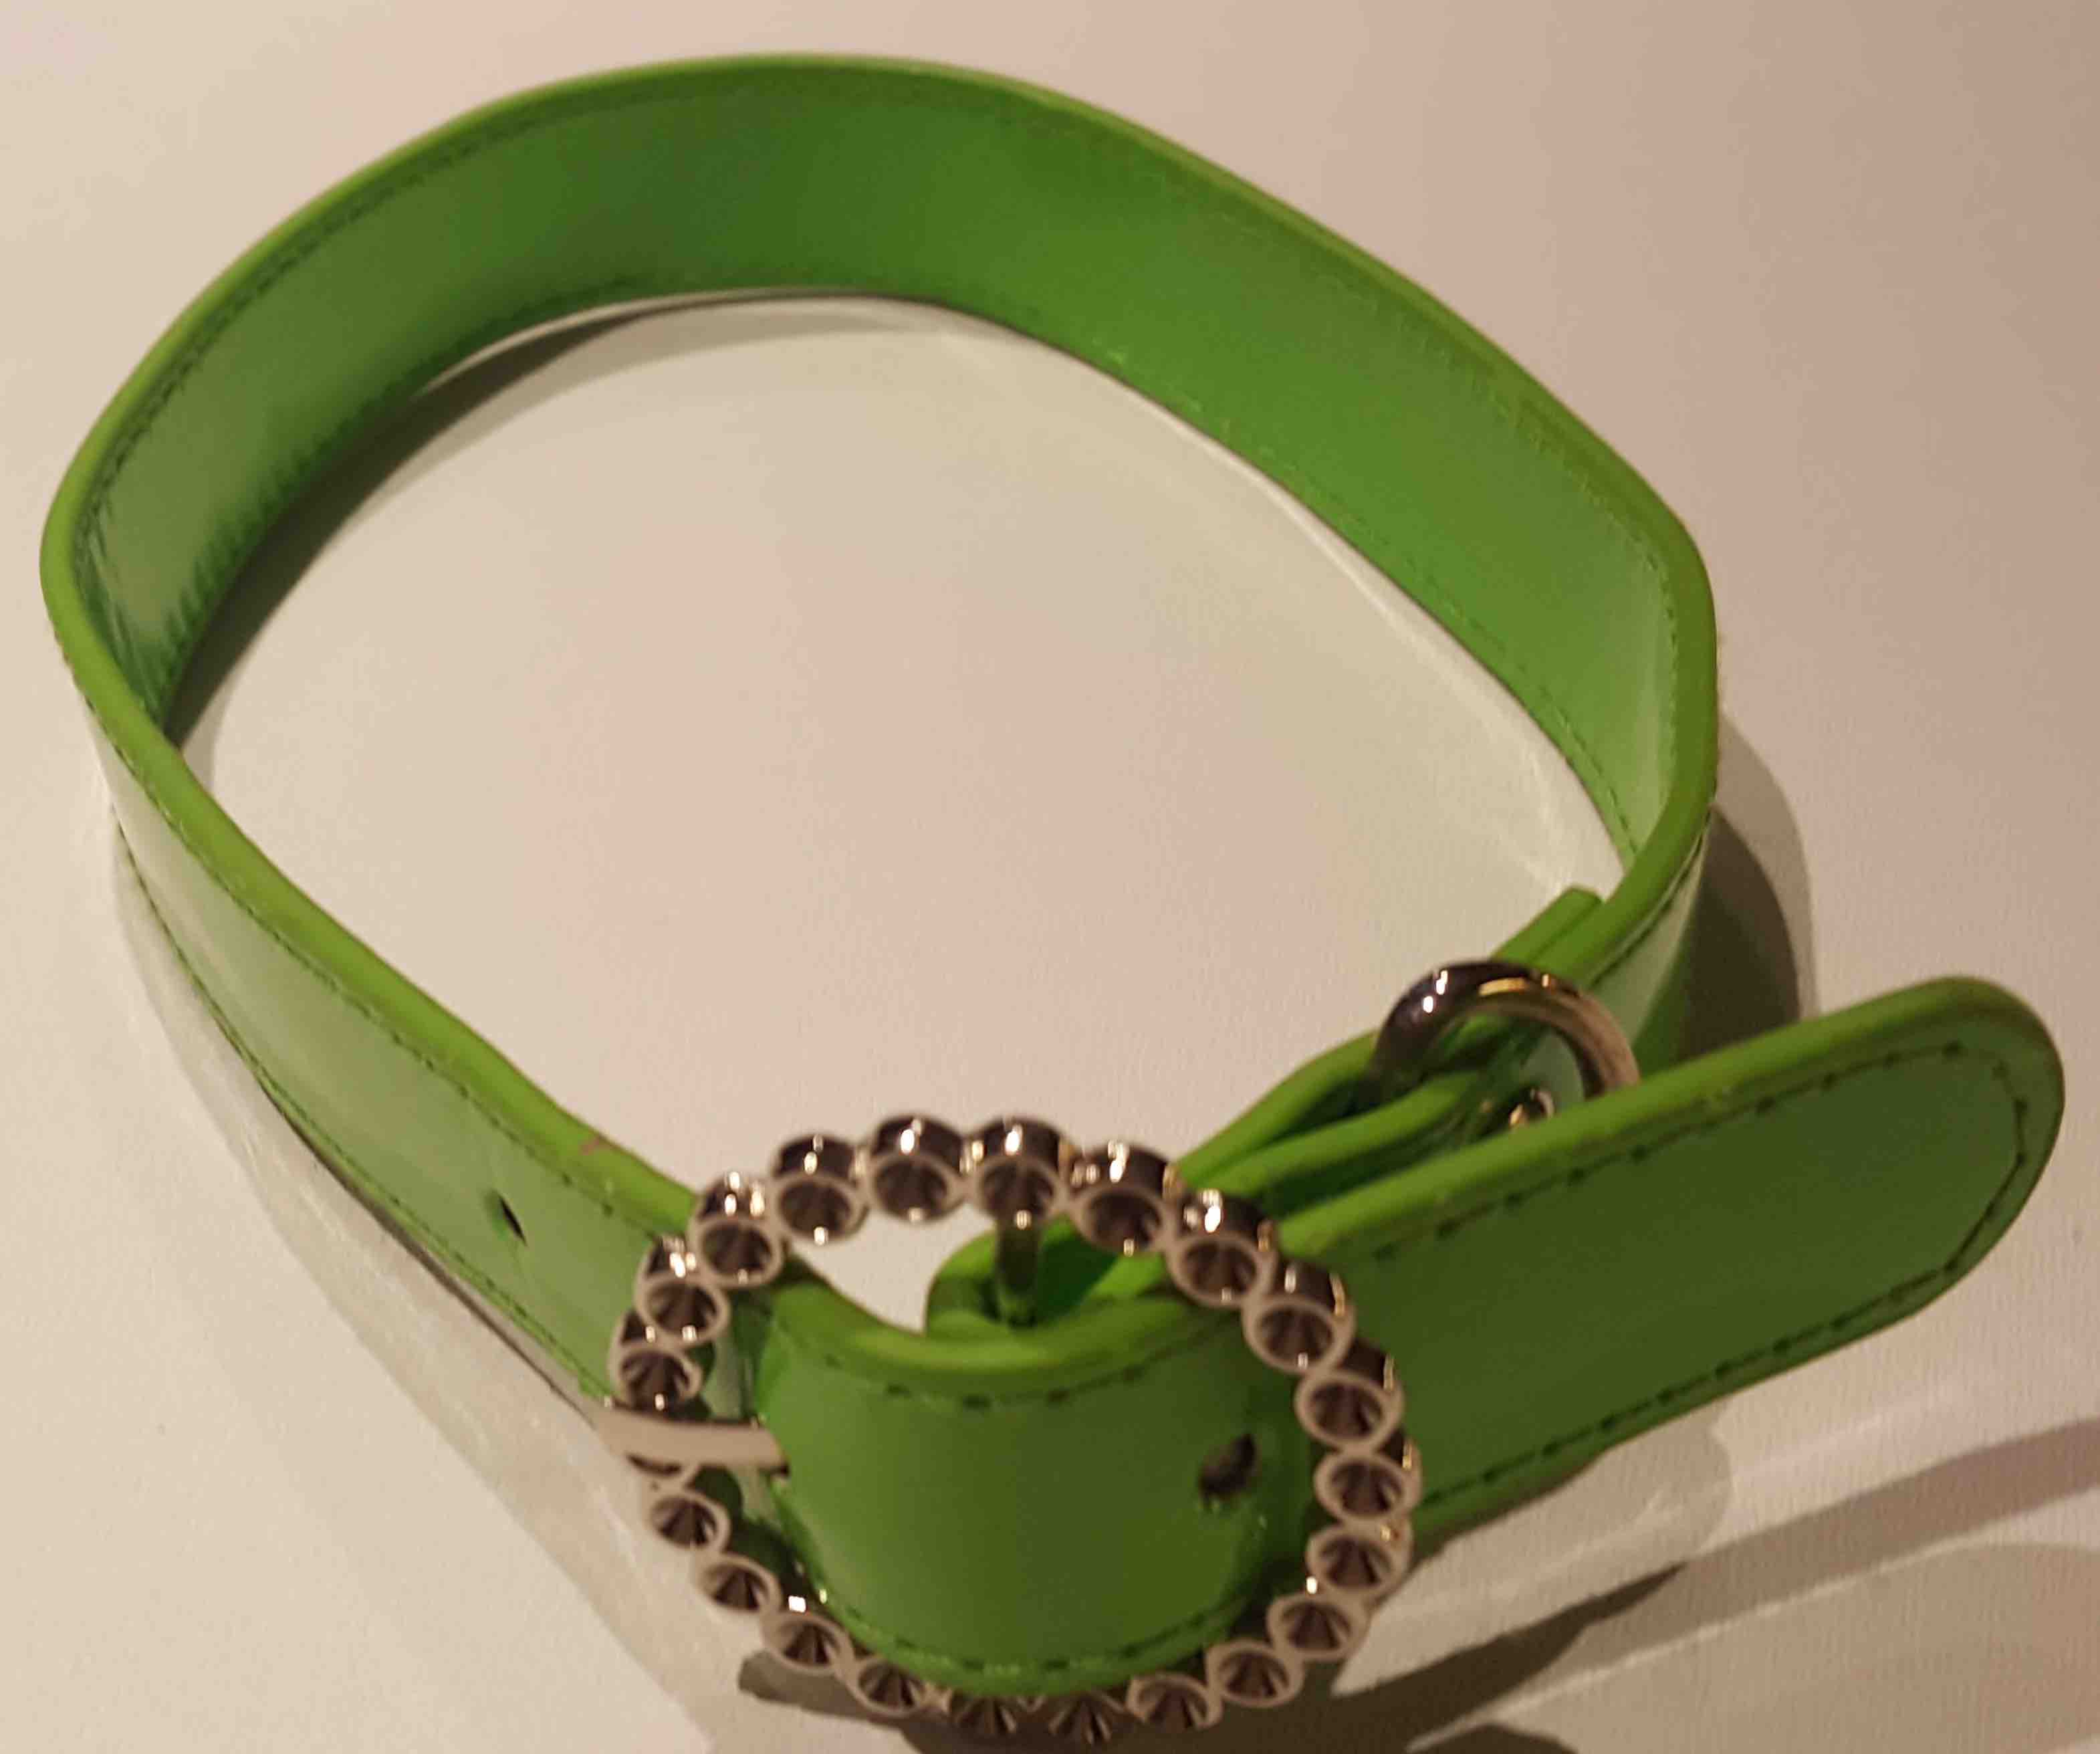 Shiny green collar